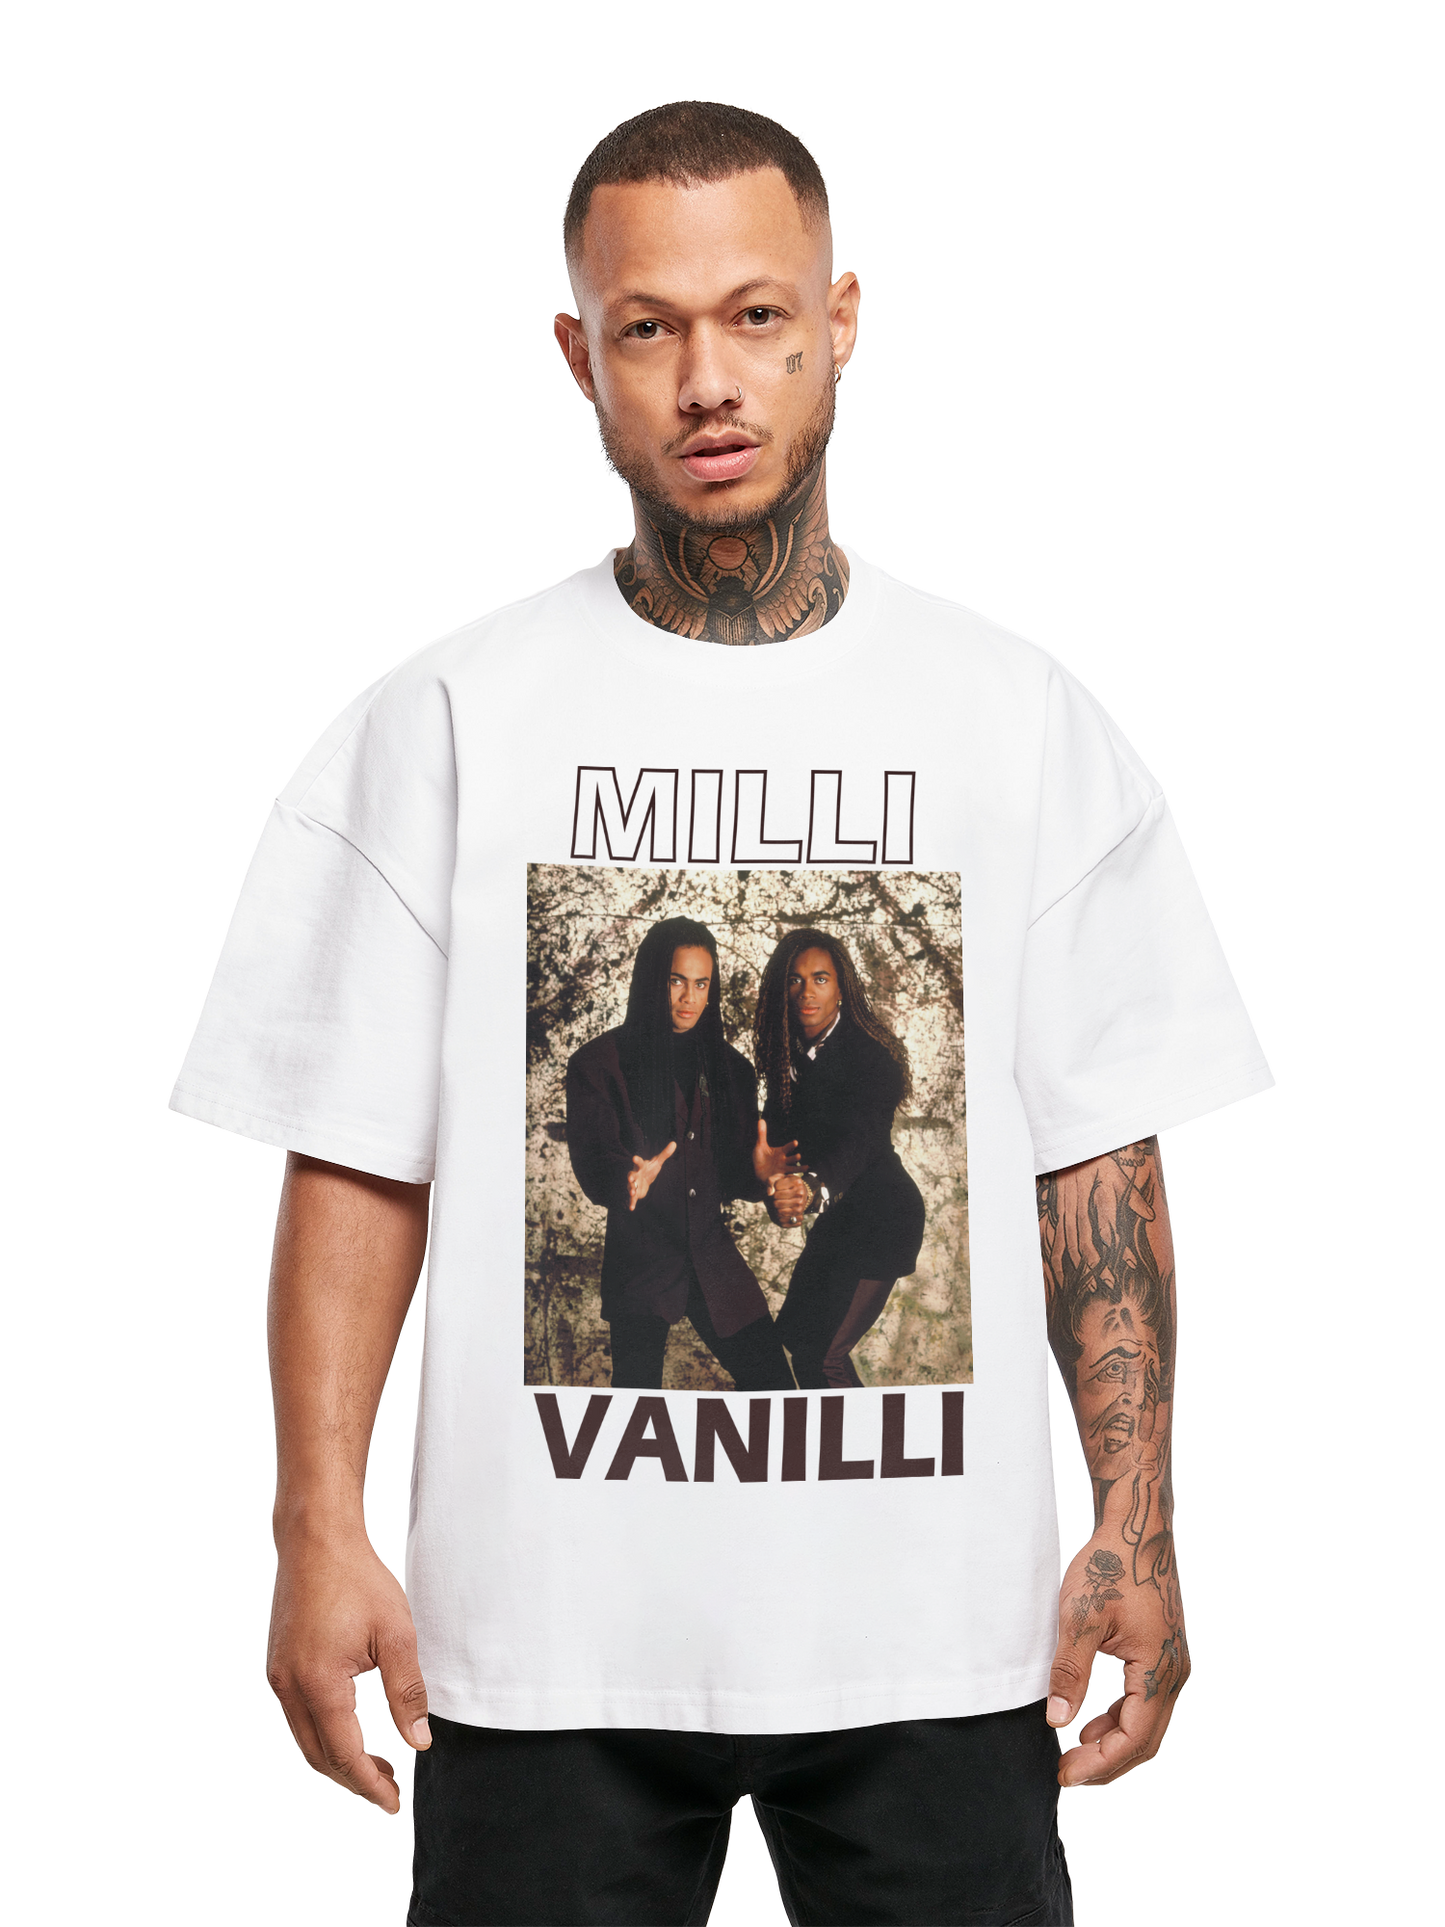 Vanilli Official – - Oversized Milli Milli Shop Vanilli Classic T-Shirt